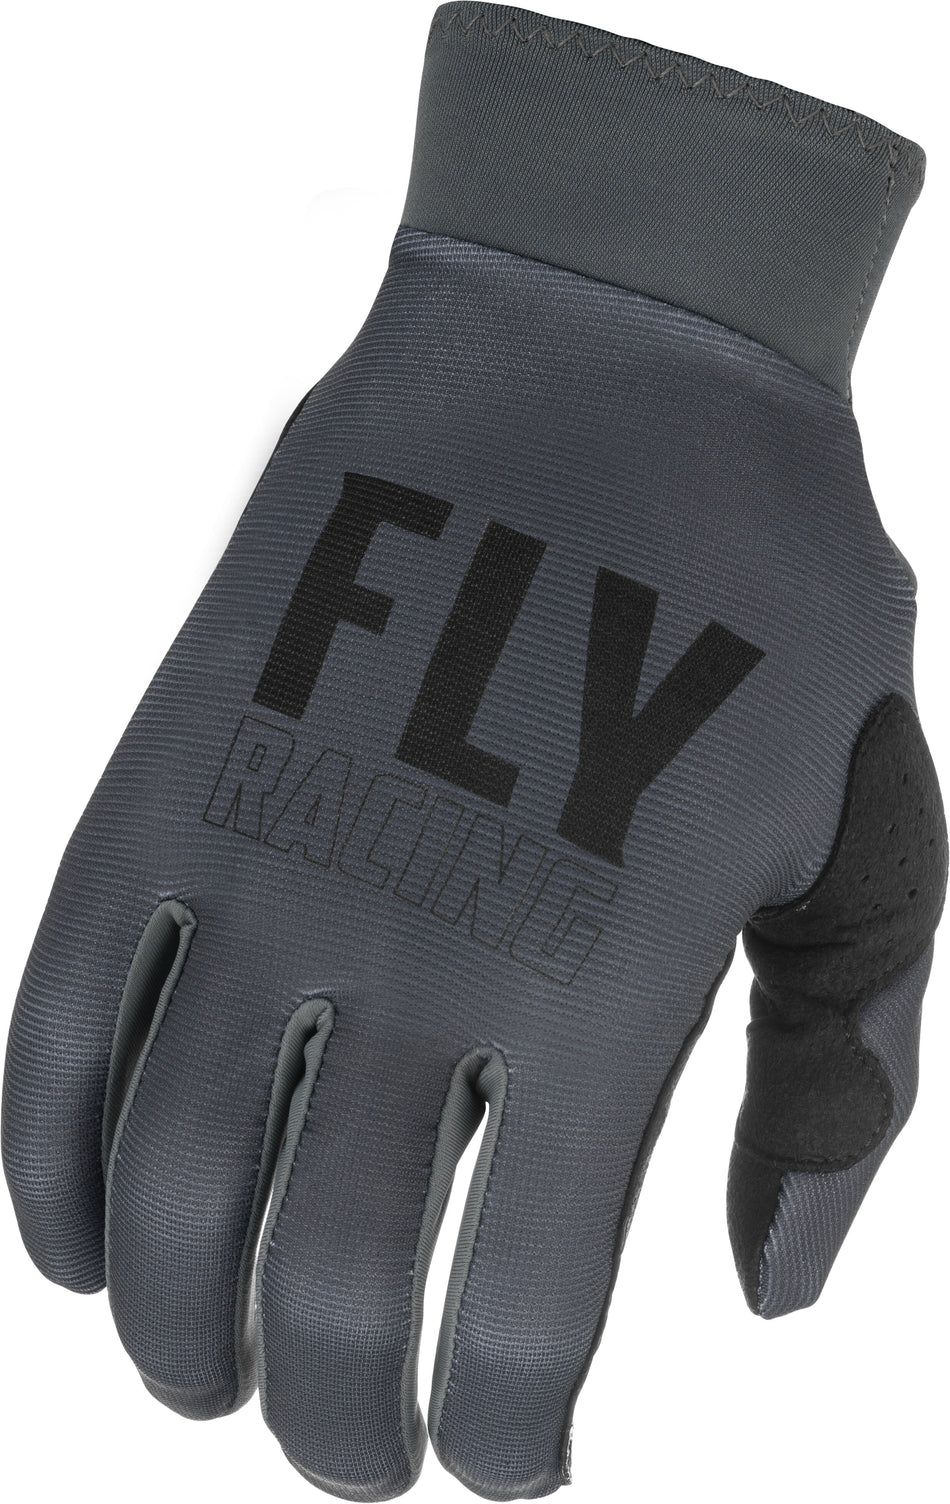 FLY RACING Pro Lite Gloves Grey/Black Sm 374-856S